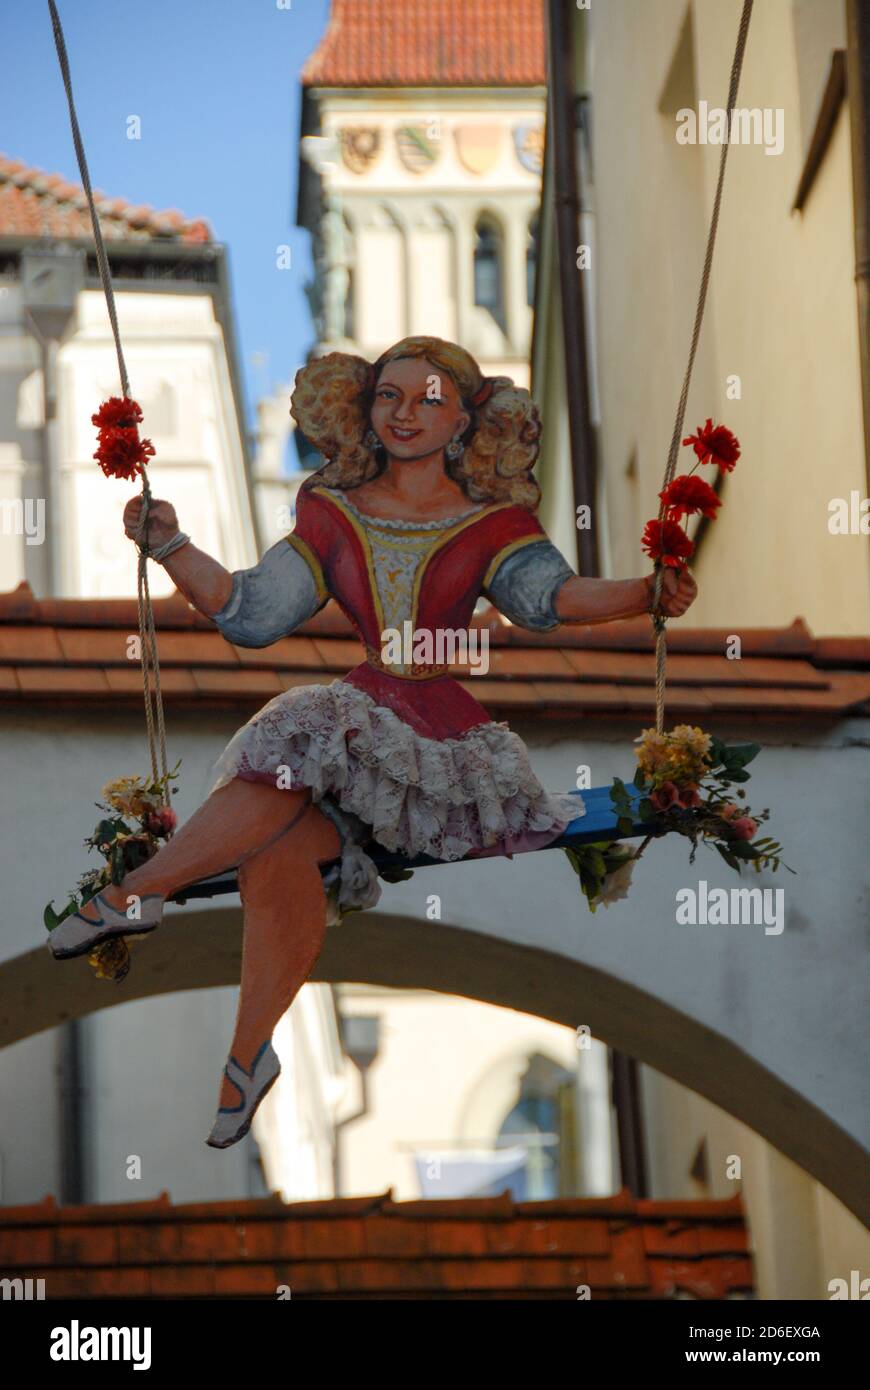 Ein lachendes Mädchen ziert das Werbeschild eines Ladens in der Passauer Altstadt. Un signe d'un magasin dans la vieille ville de Passau avec une fille souriante Banque D'Images